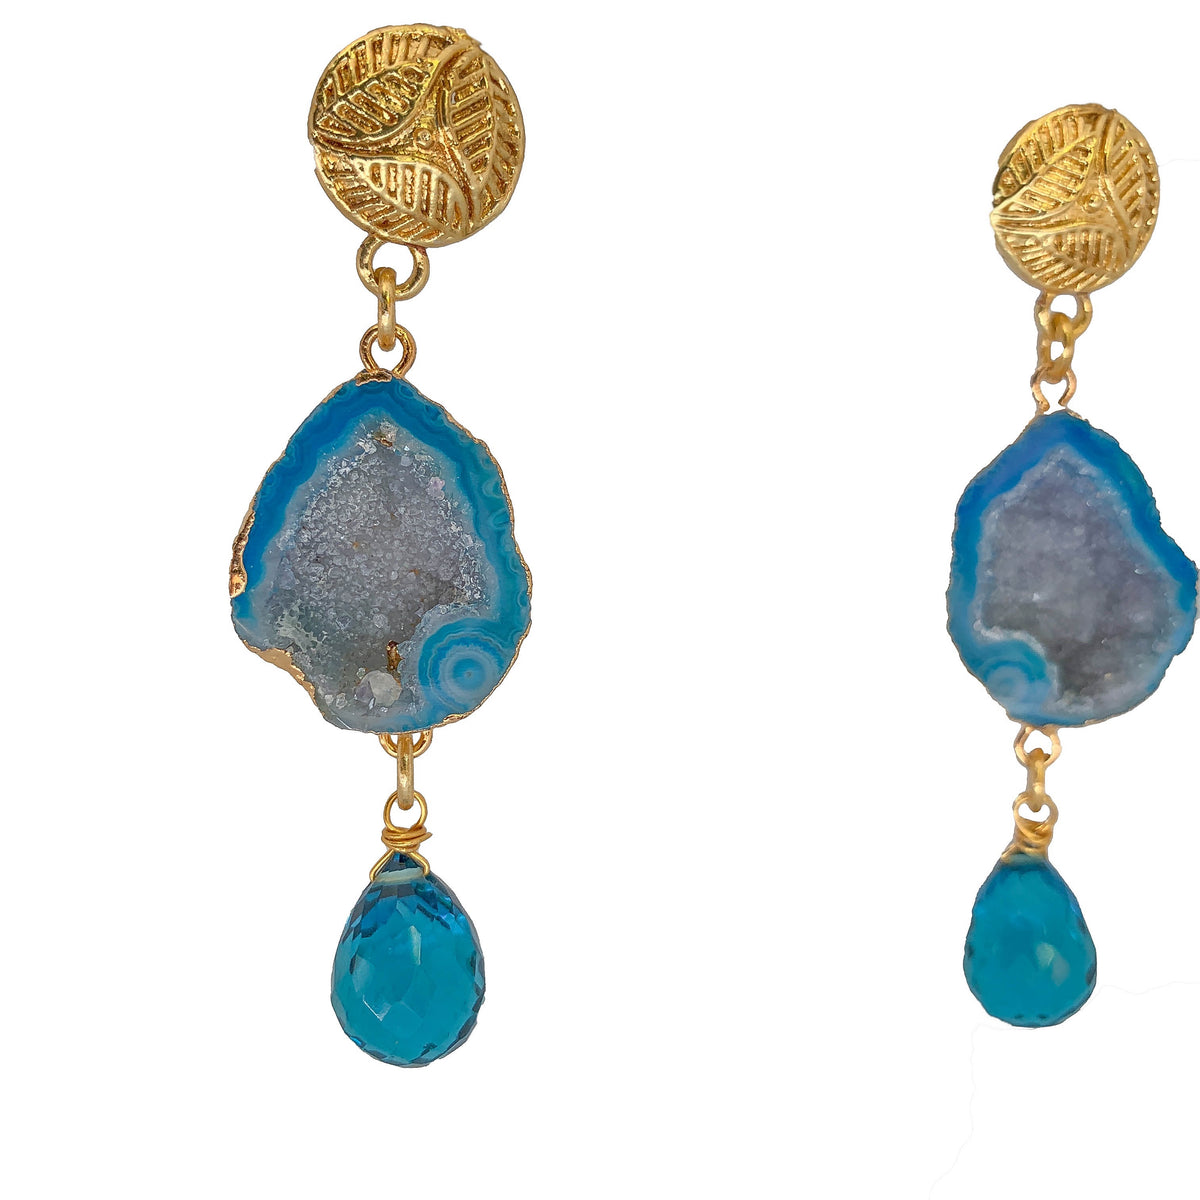 Handmade gemstone earrings Unique earrings Artisan handcrafted earrings